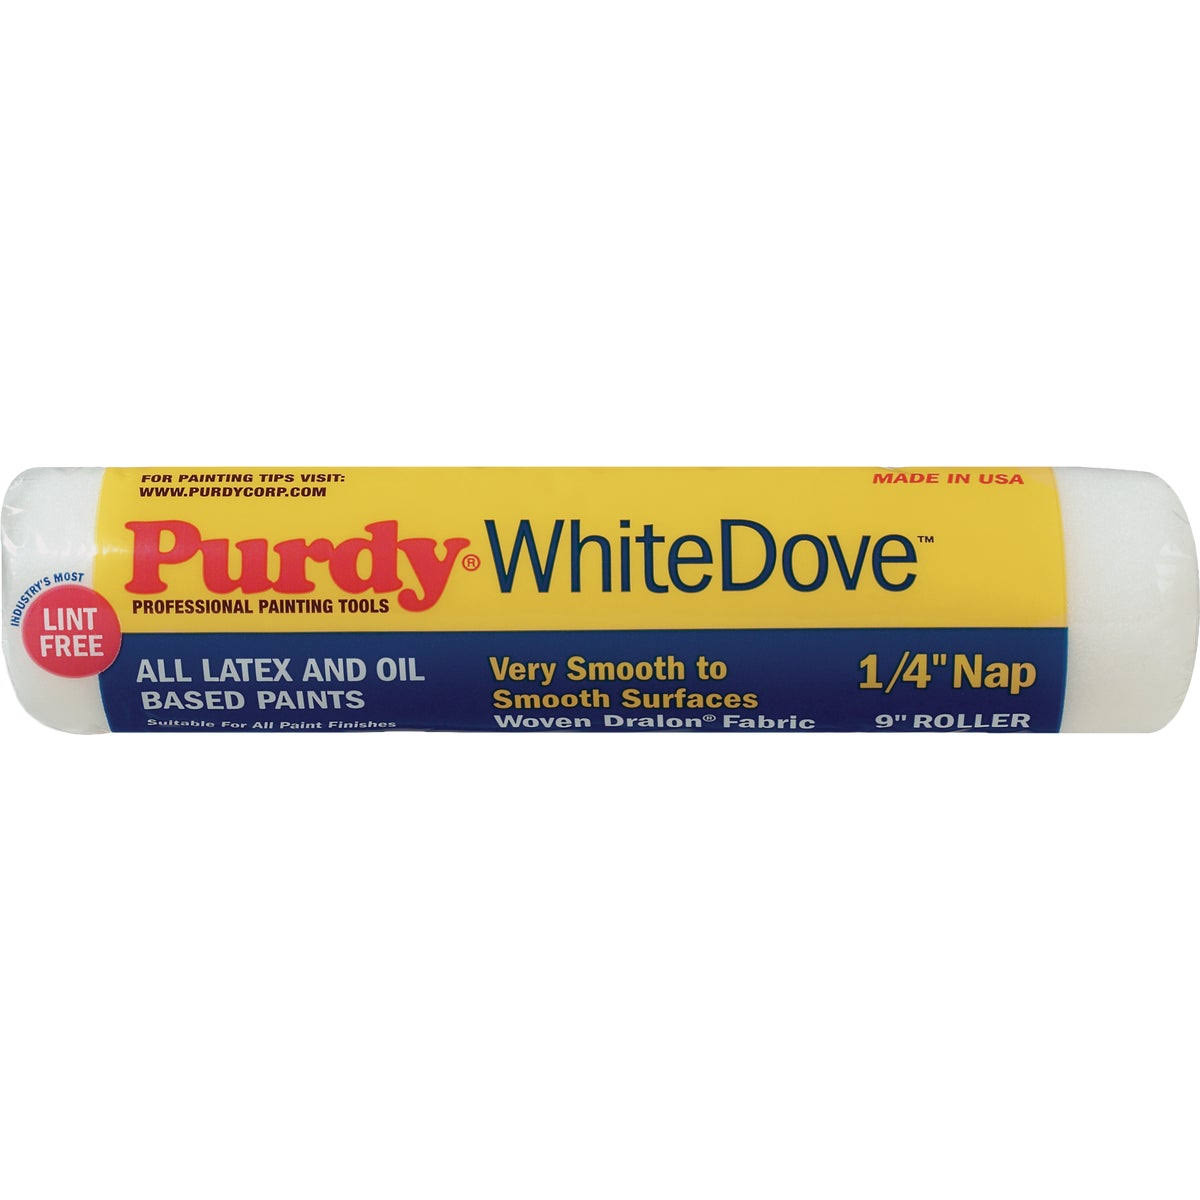 Purdy White Dove Roller Cover Polypropylene 1/4 " x 9 " Nap